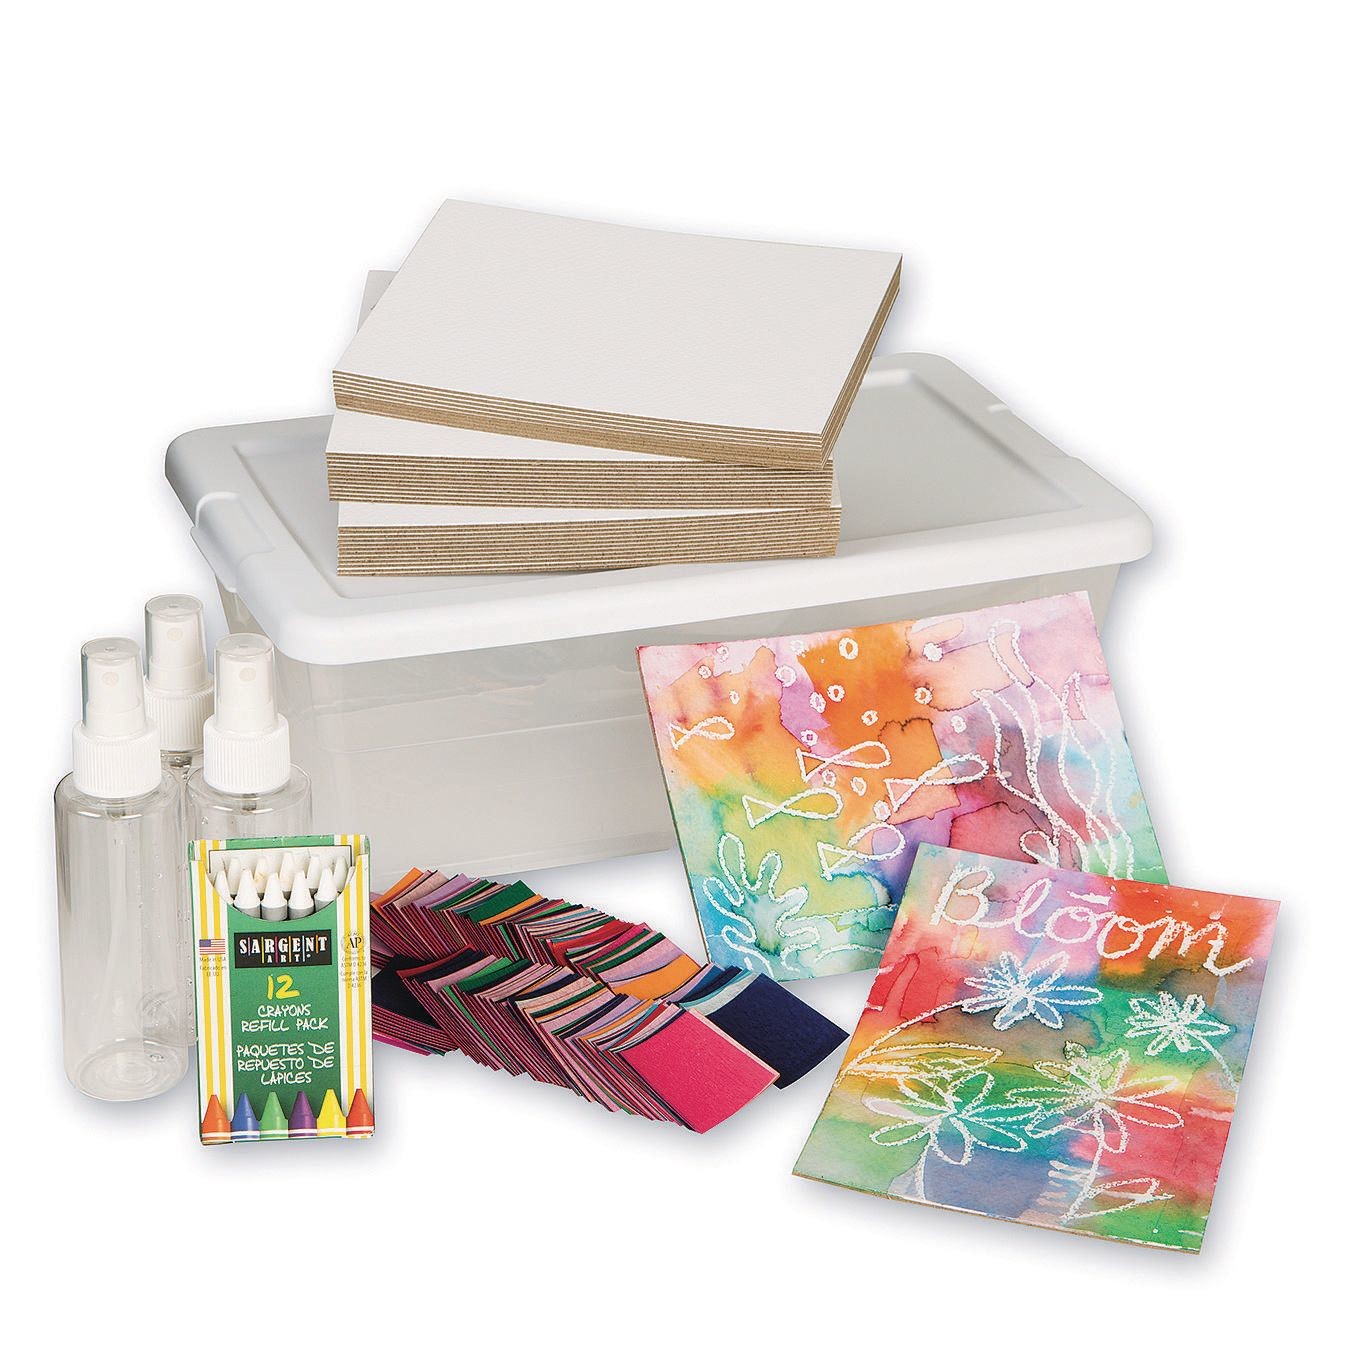 Tissue Paper Painting - Bleeding Color Art Activity - S&S Blog